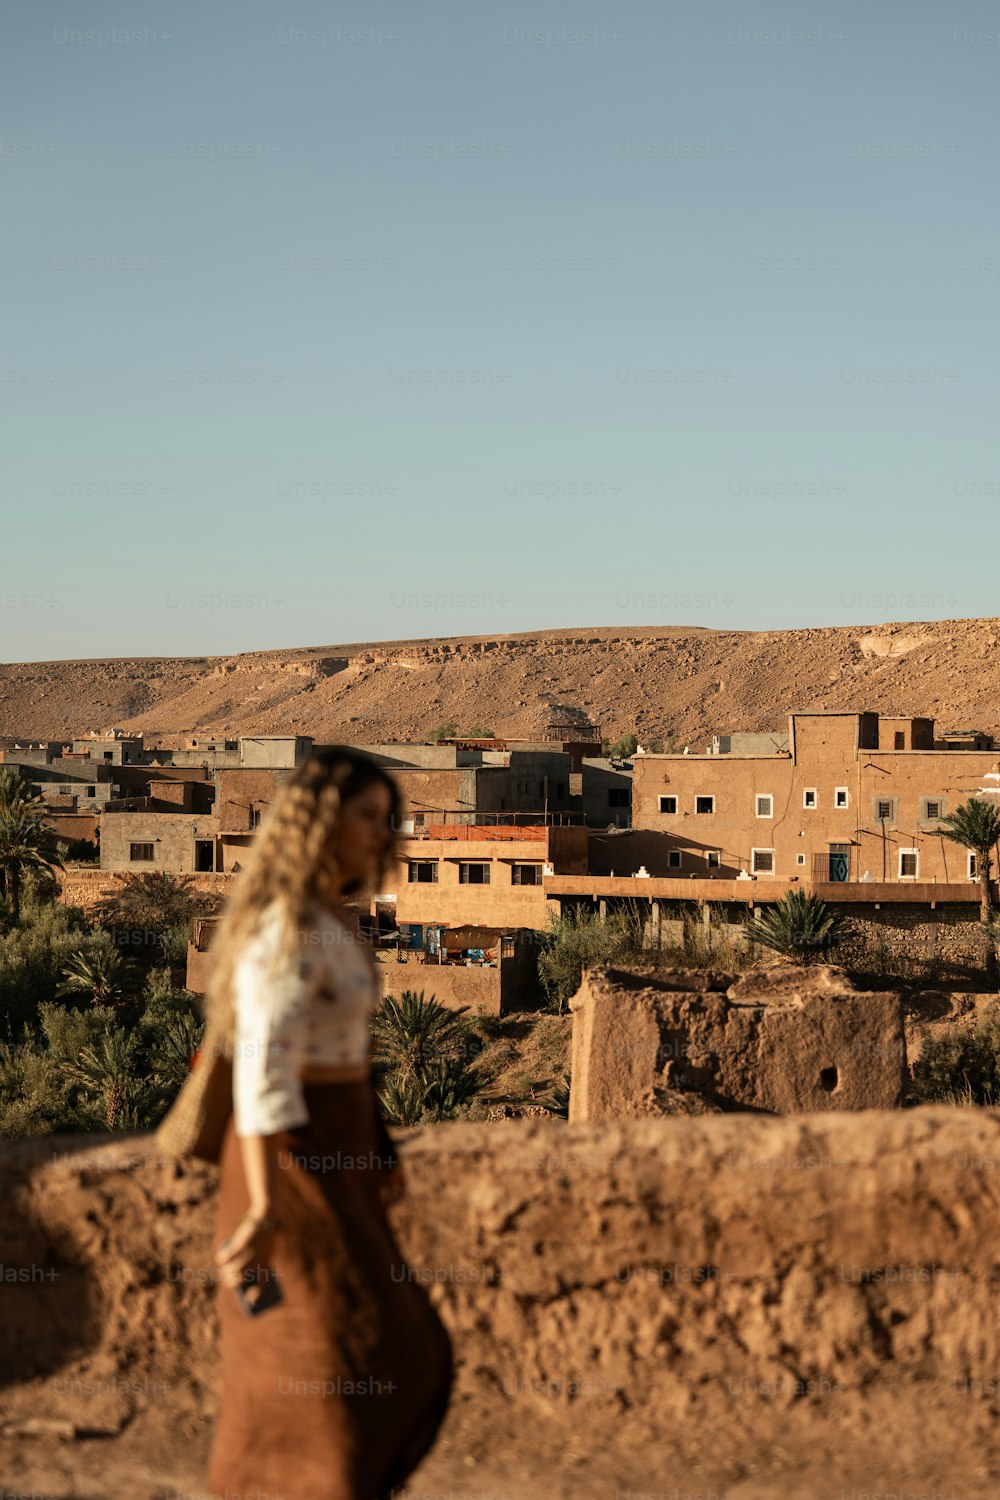 a woman walking down a dirt road next to a desert town